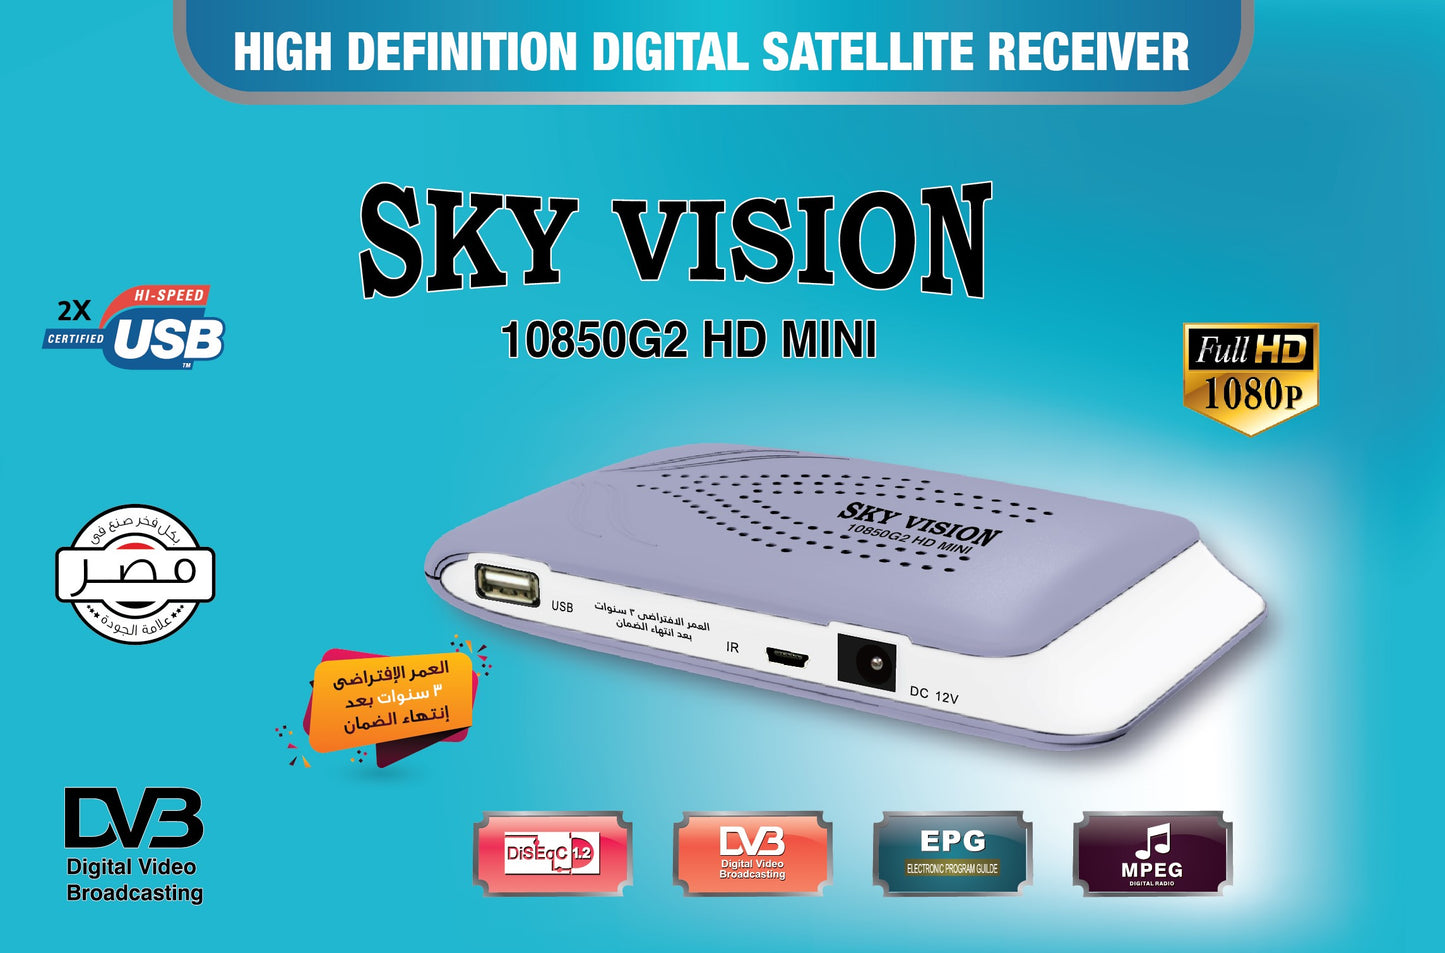 SKYVISION, 10850G2 HD Mini, Receiver